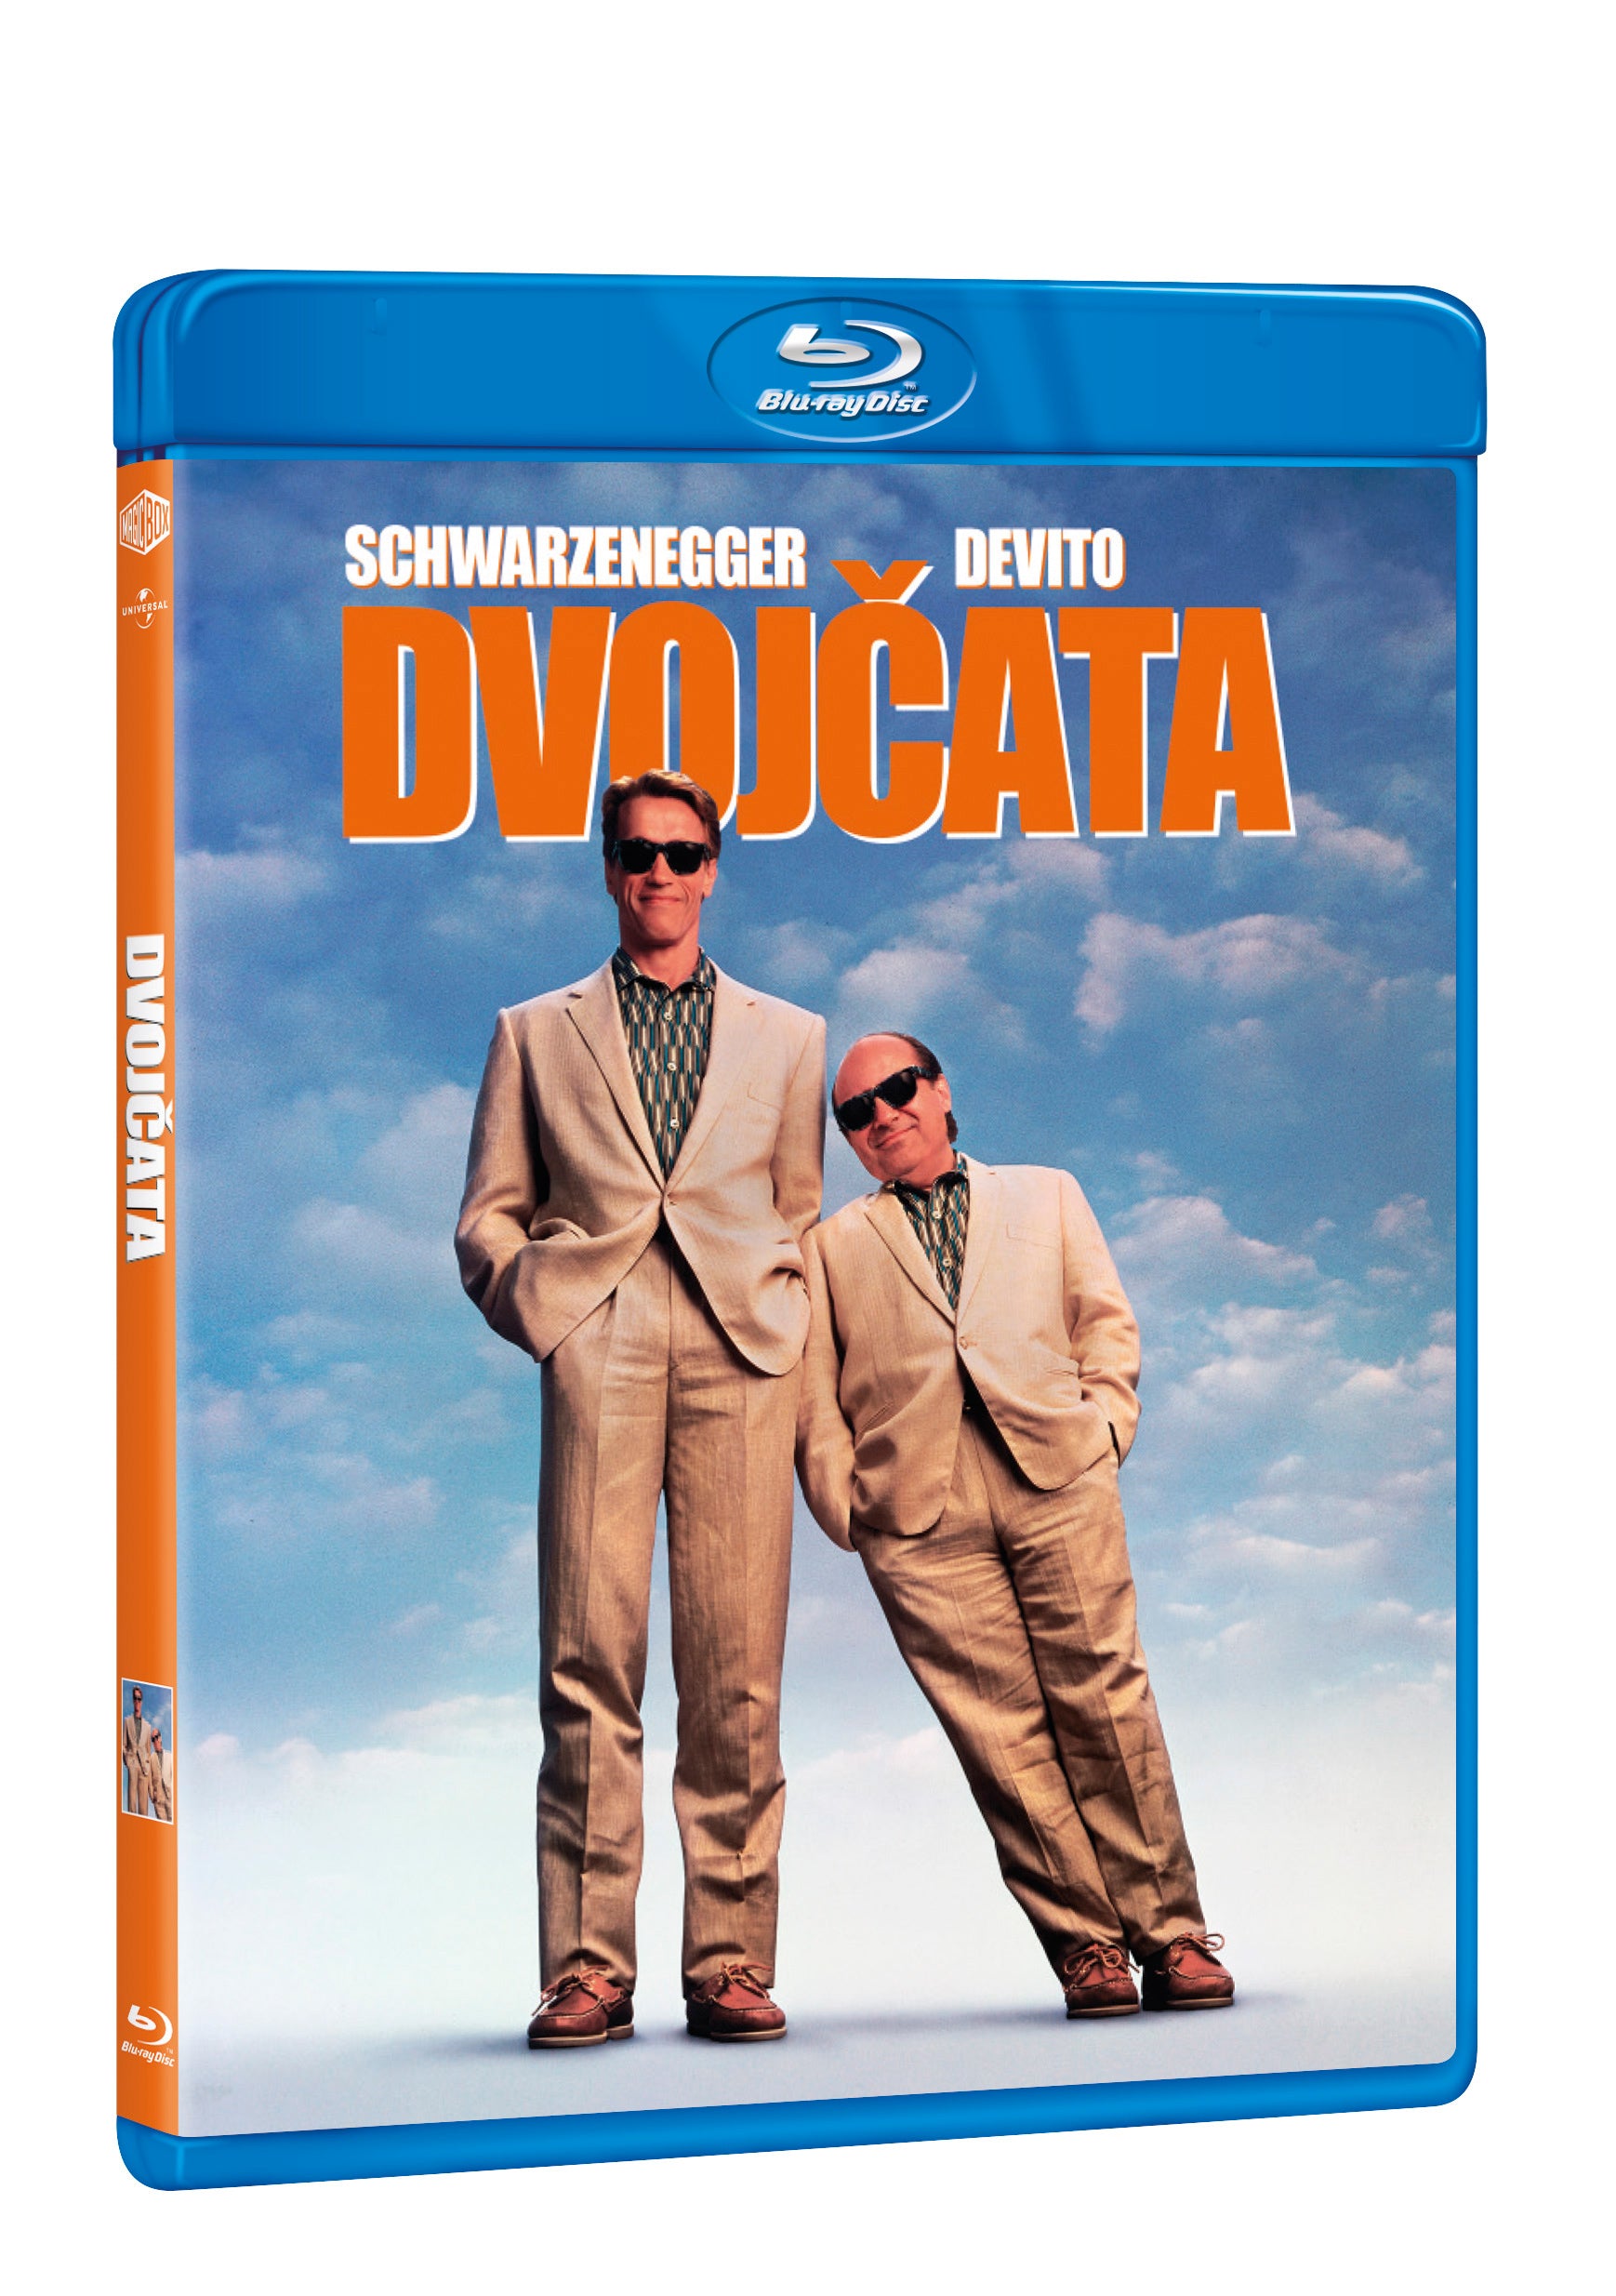 Dvojcata BD / The Twins - Czech version